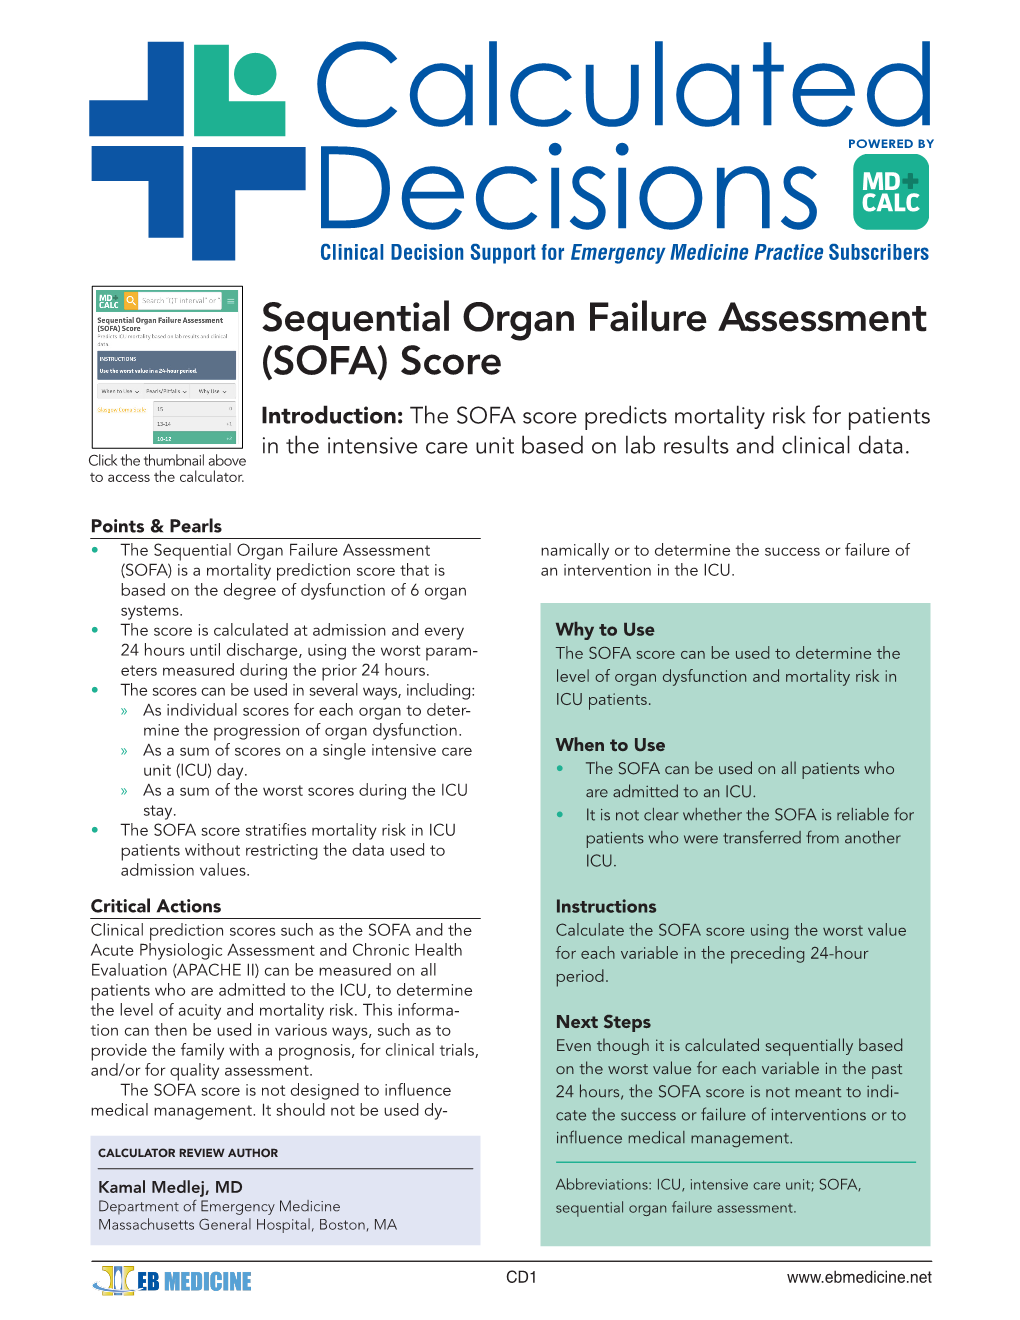 Sequential Organ Failure Assessment (SOFA) Score